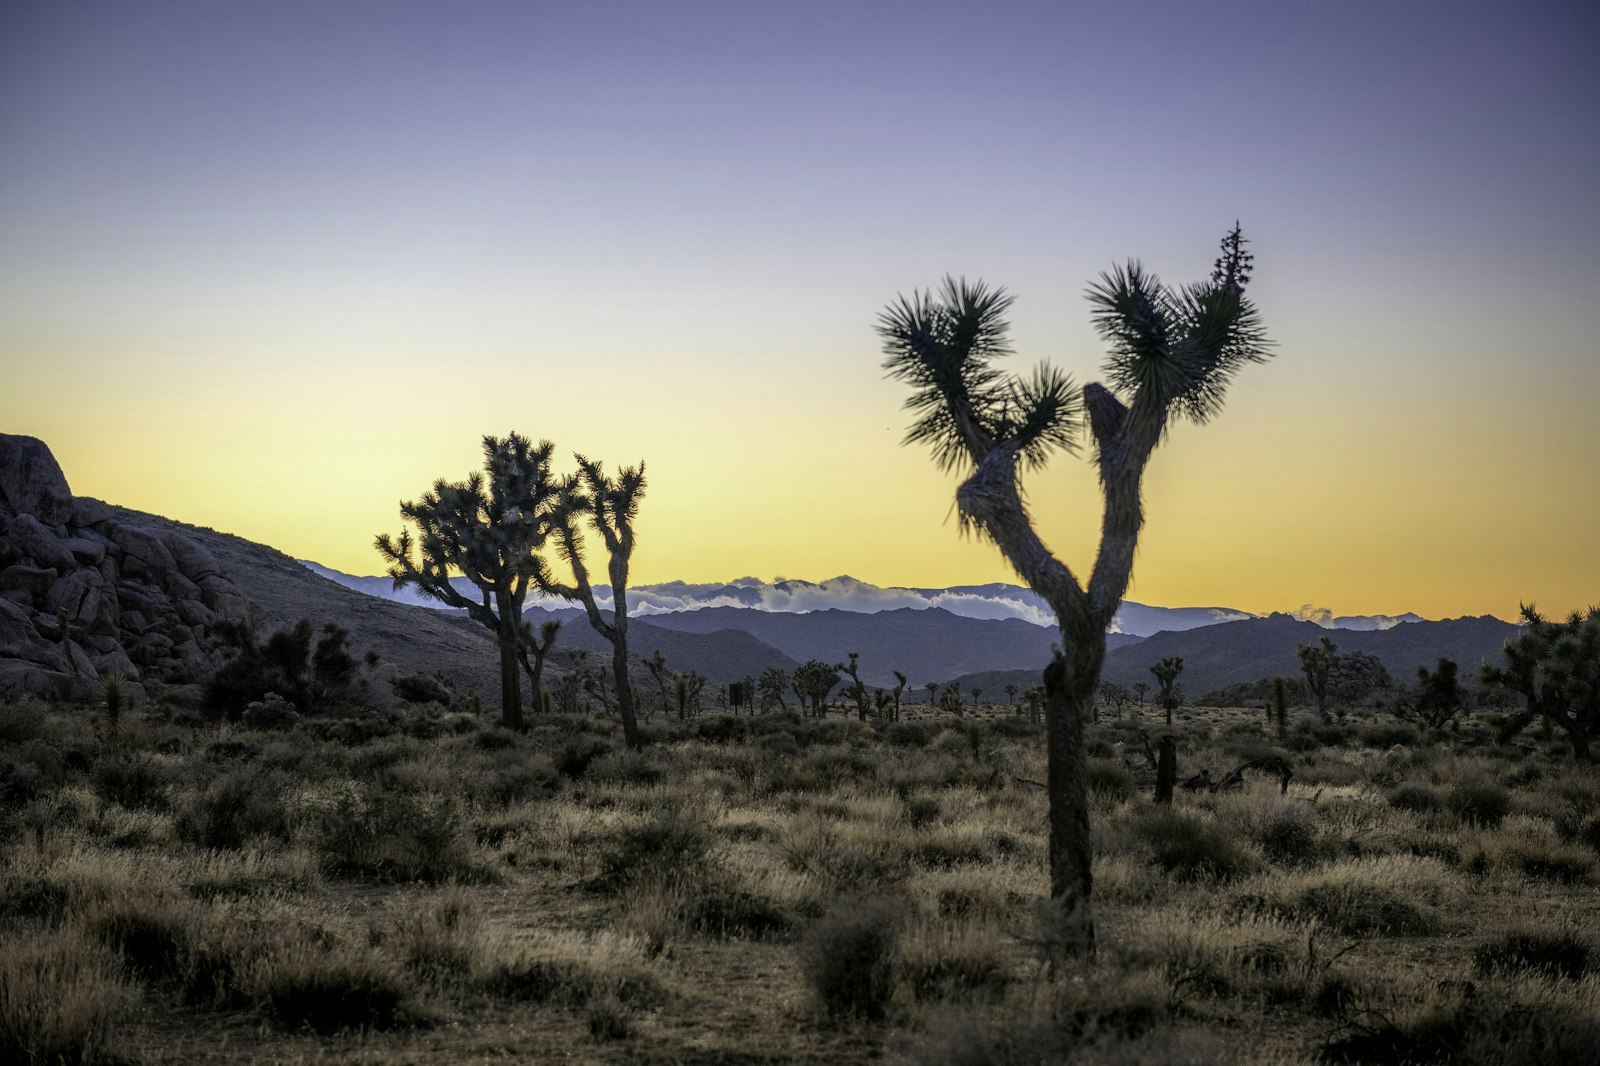 Sunset in the distance illuminates Joshua Trees and a desert landscape